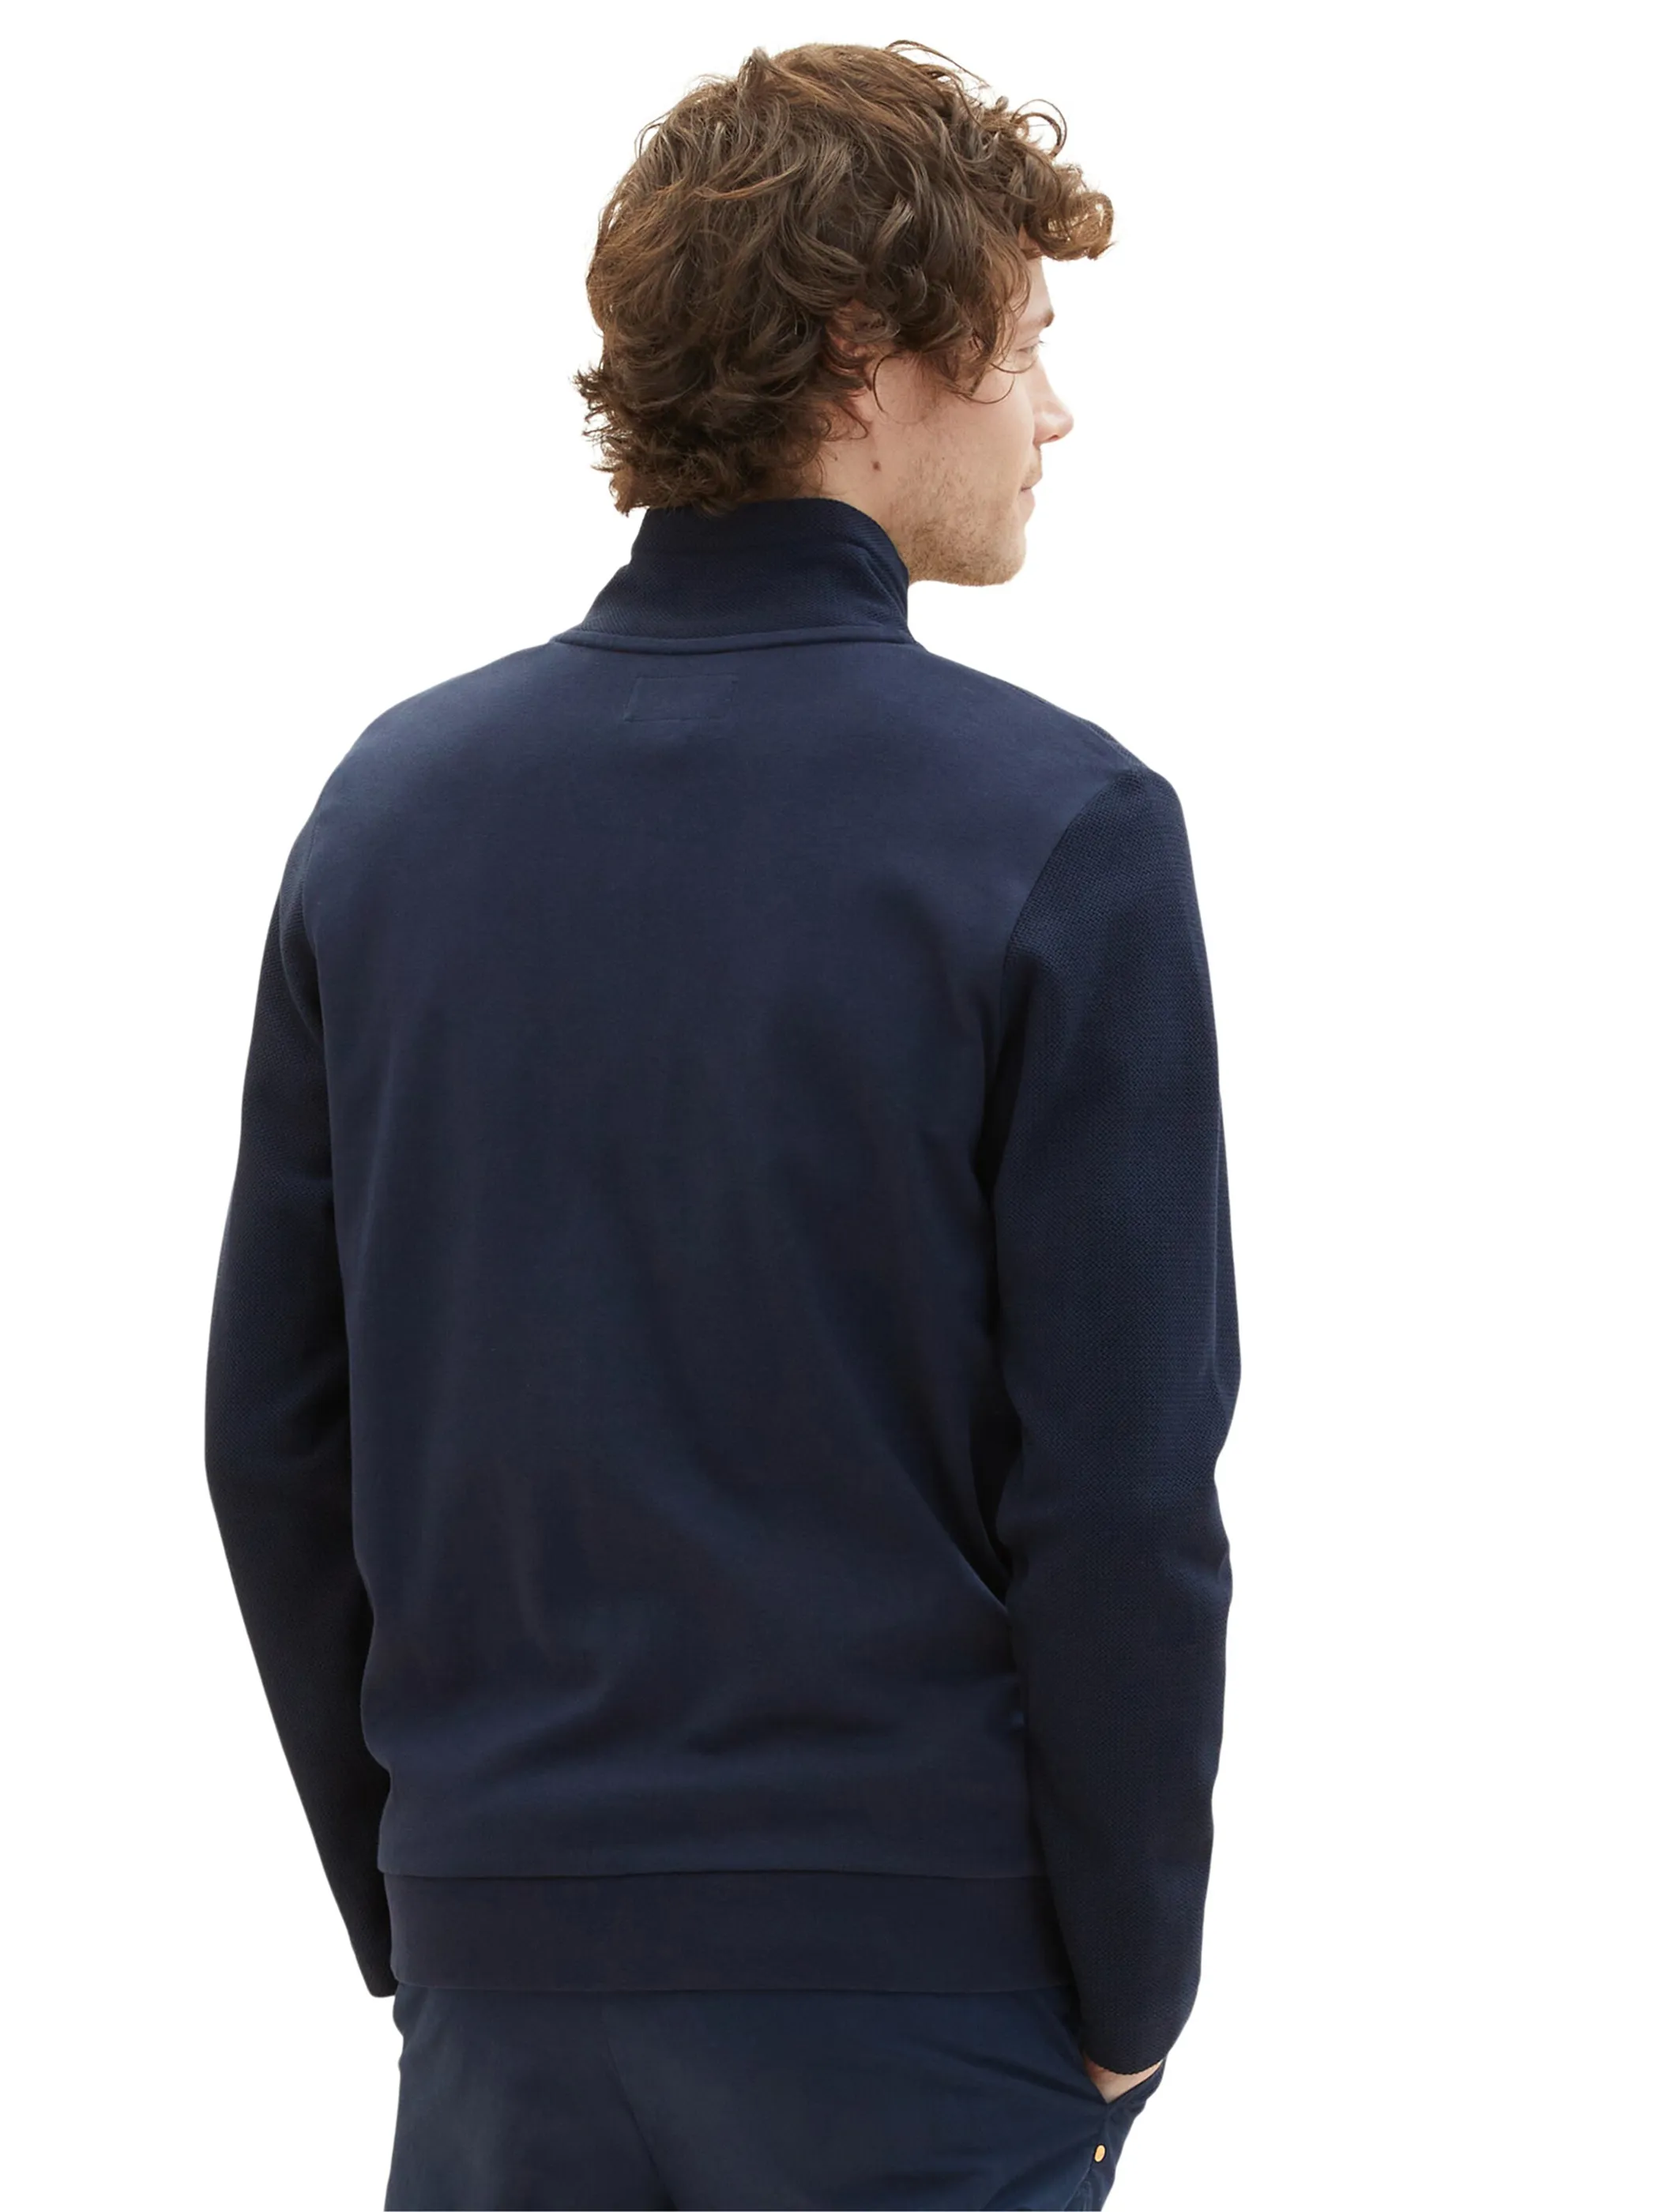 Tom Tailor 1036348 structured t-shirt jacket Blau 880540 10668 2